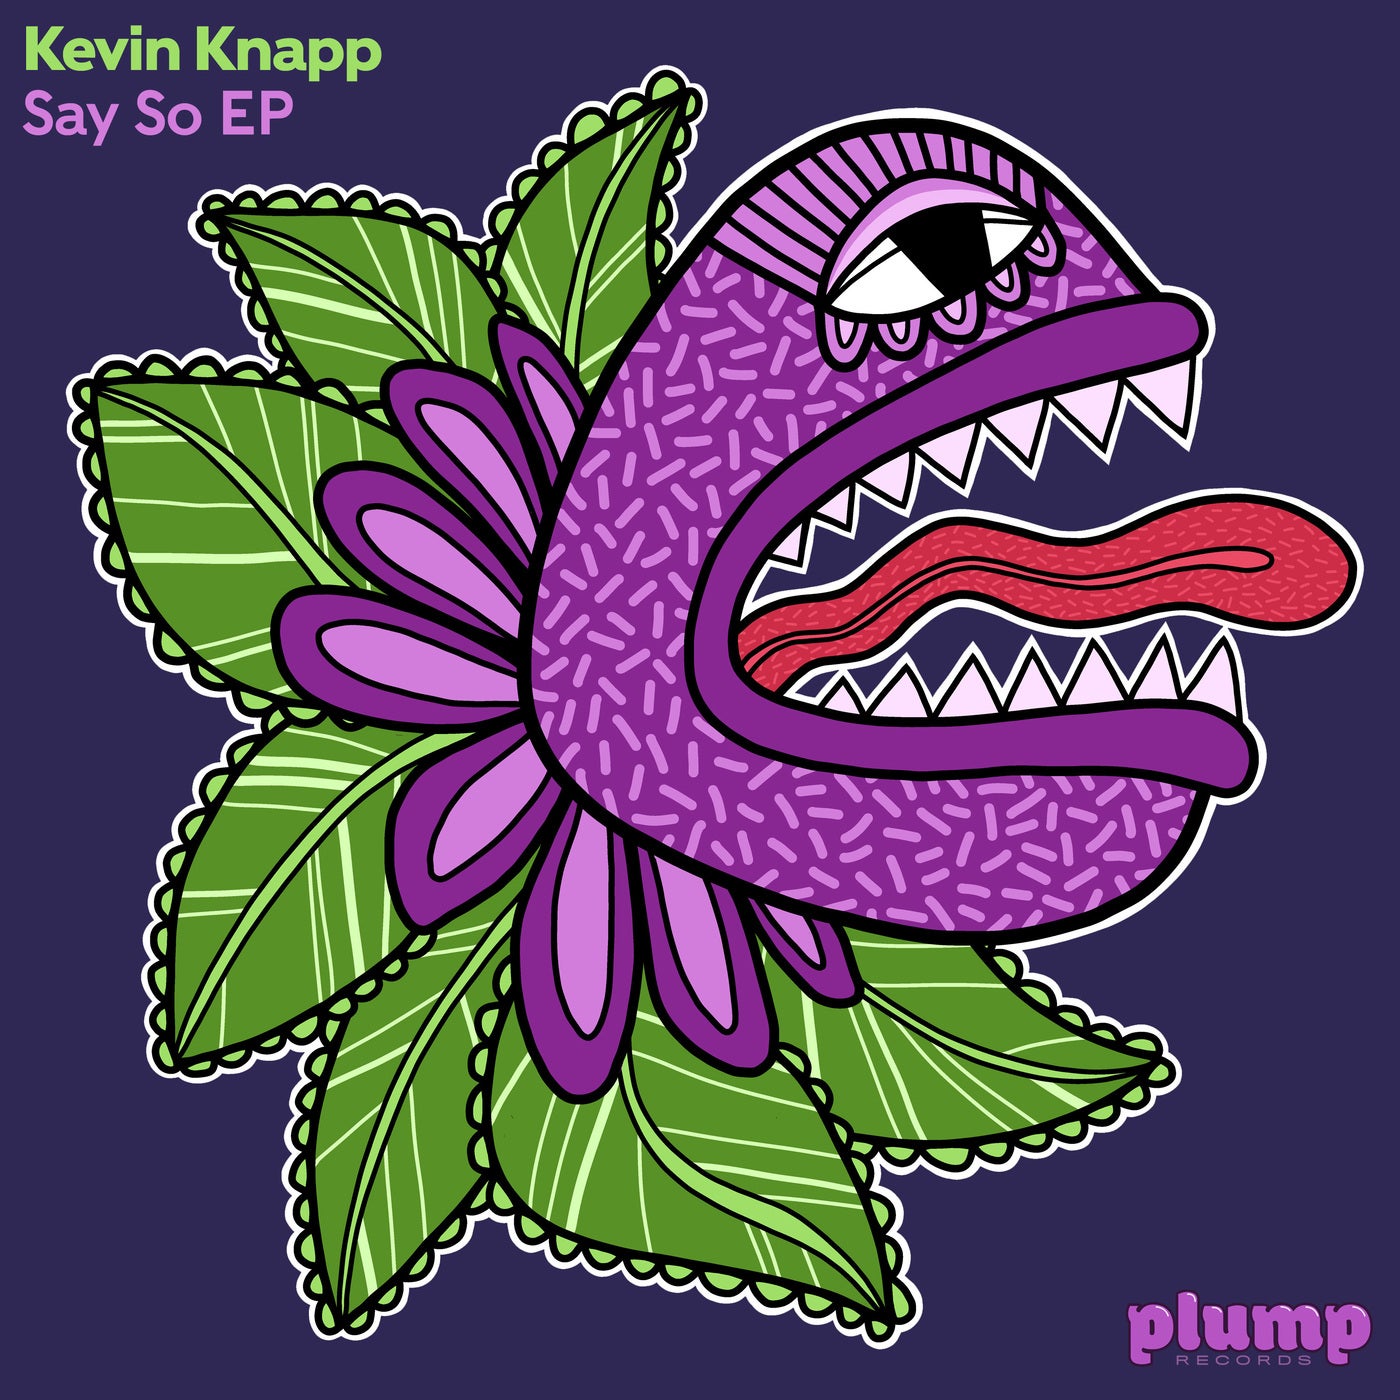 image cover: Kevin Knapp - Say So EP / PLUMP003